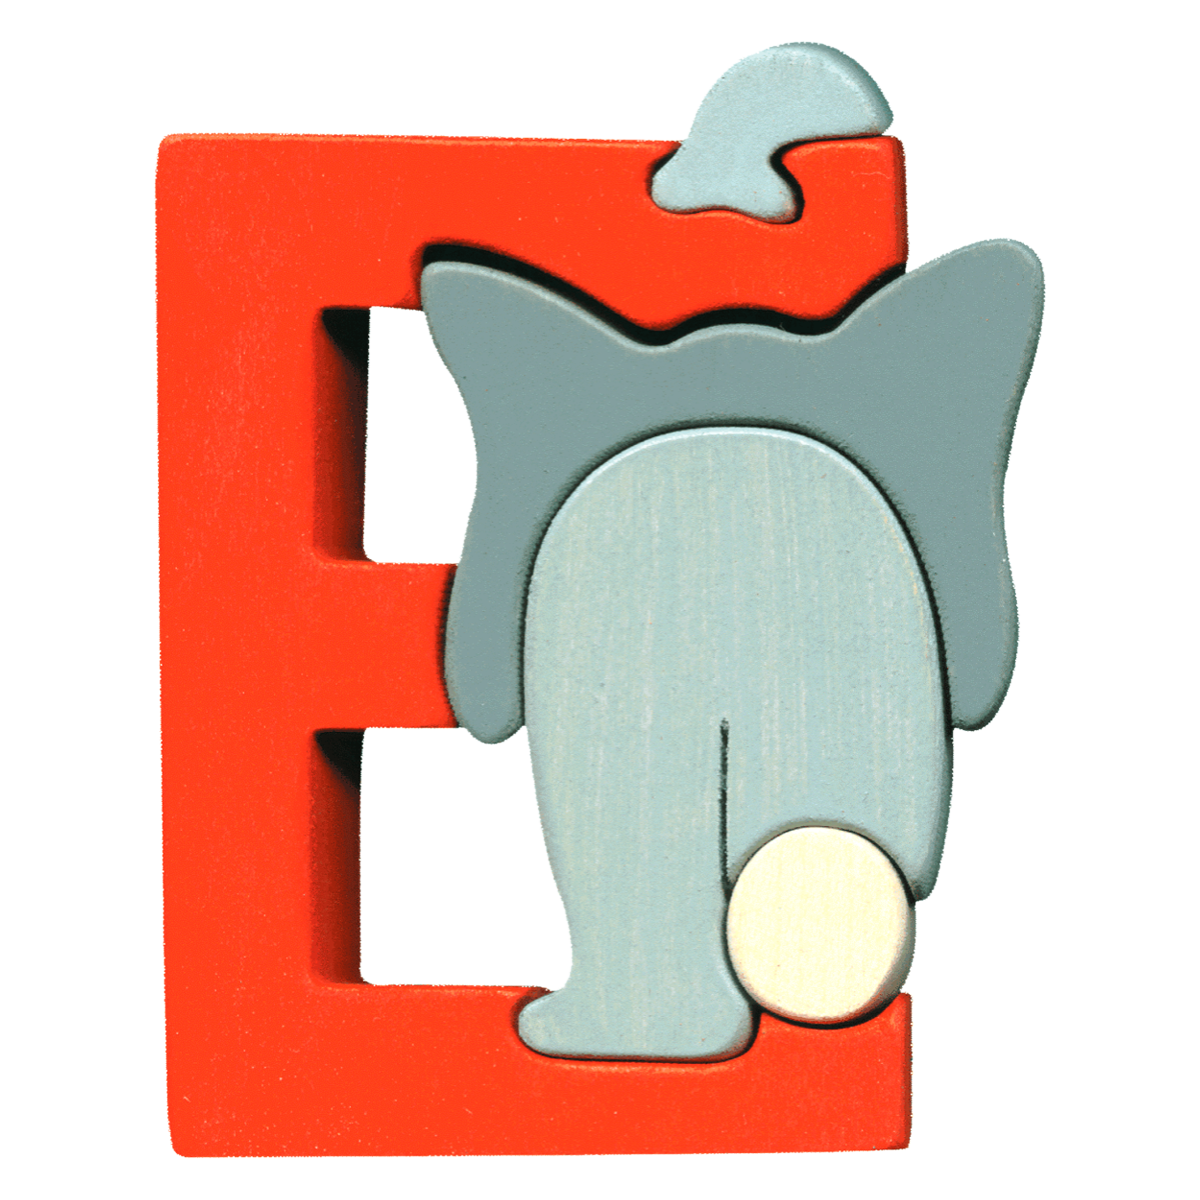 E - elephant